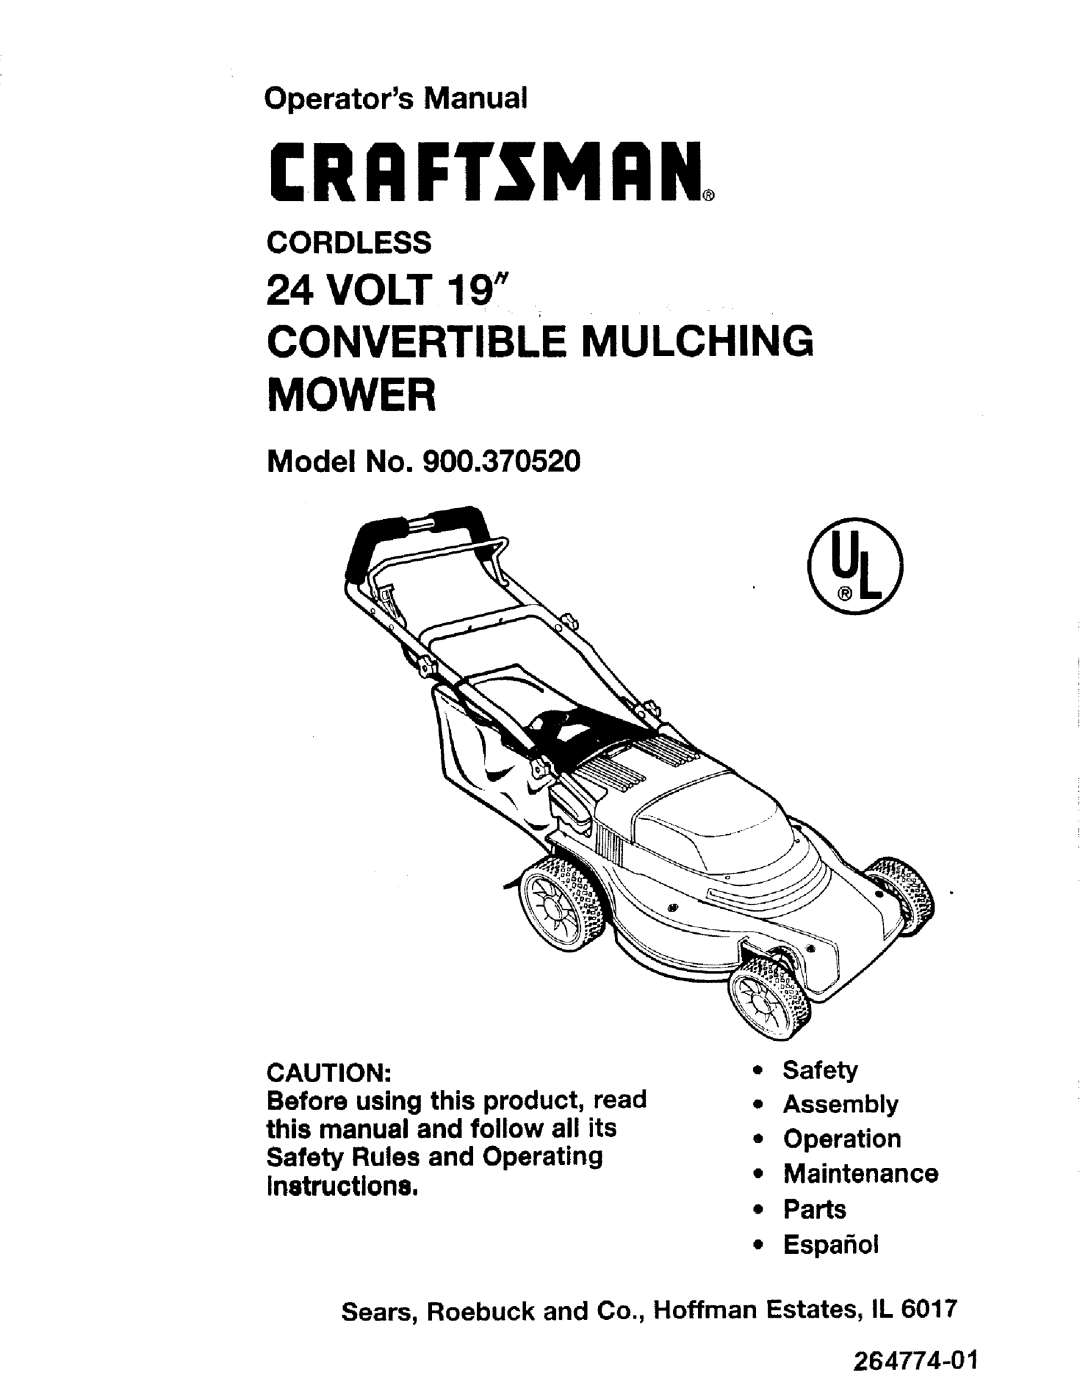 Craftsman 900.370520 manual Mower, CRRFTSMRNo, Convertible Mulching, 24VOLT 19 M, Operators Manual, Model No, Cordless 